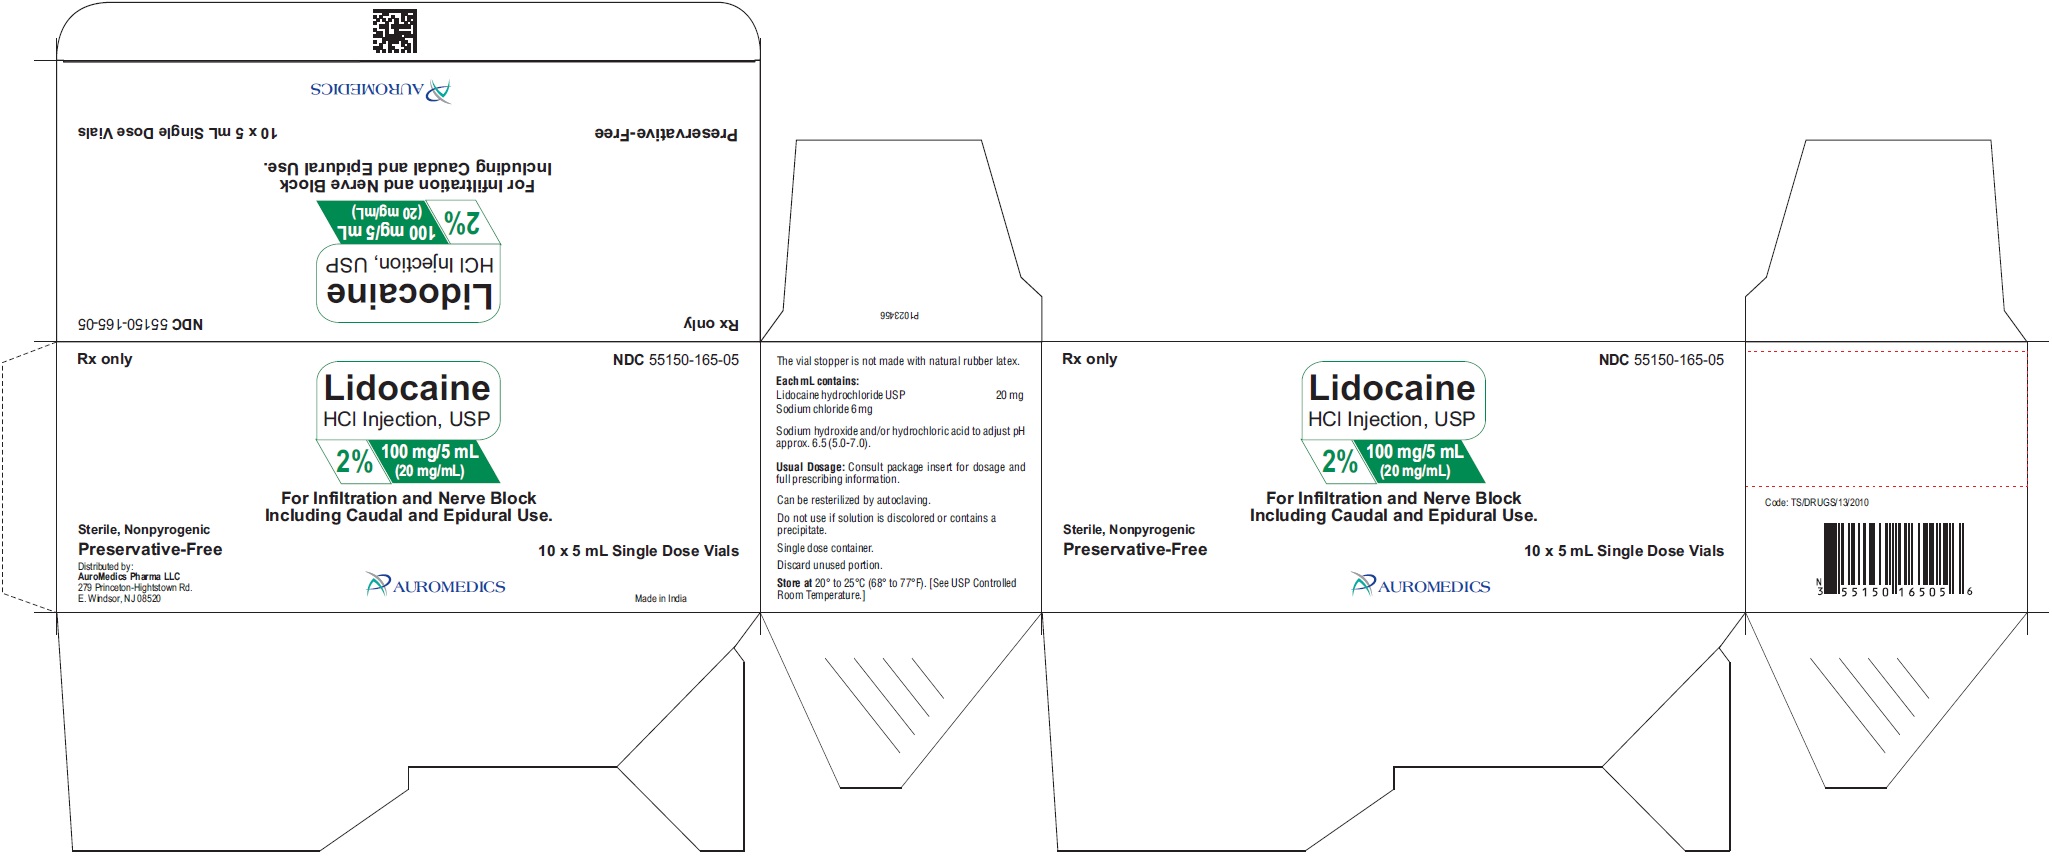 PACKAGE LABEL-PRINCIPAL DISPLAY PANEL - 2% 100 mg/5 mL (20 mg/mL) - 5 mL Container-Carton [10 Vials]